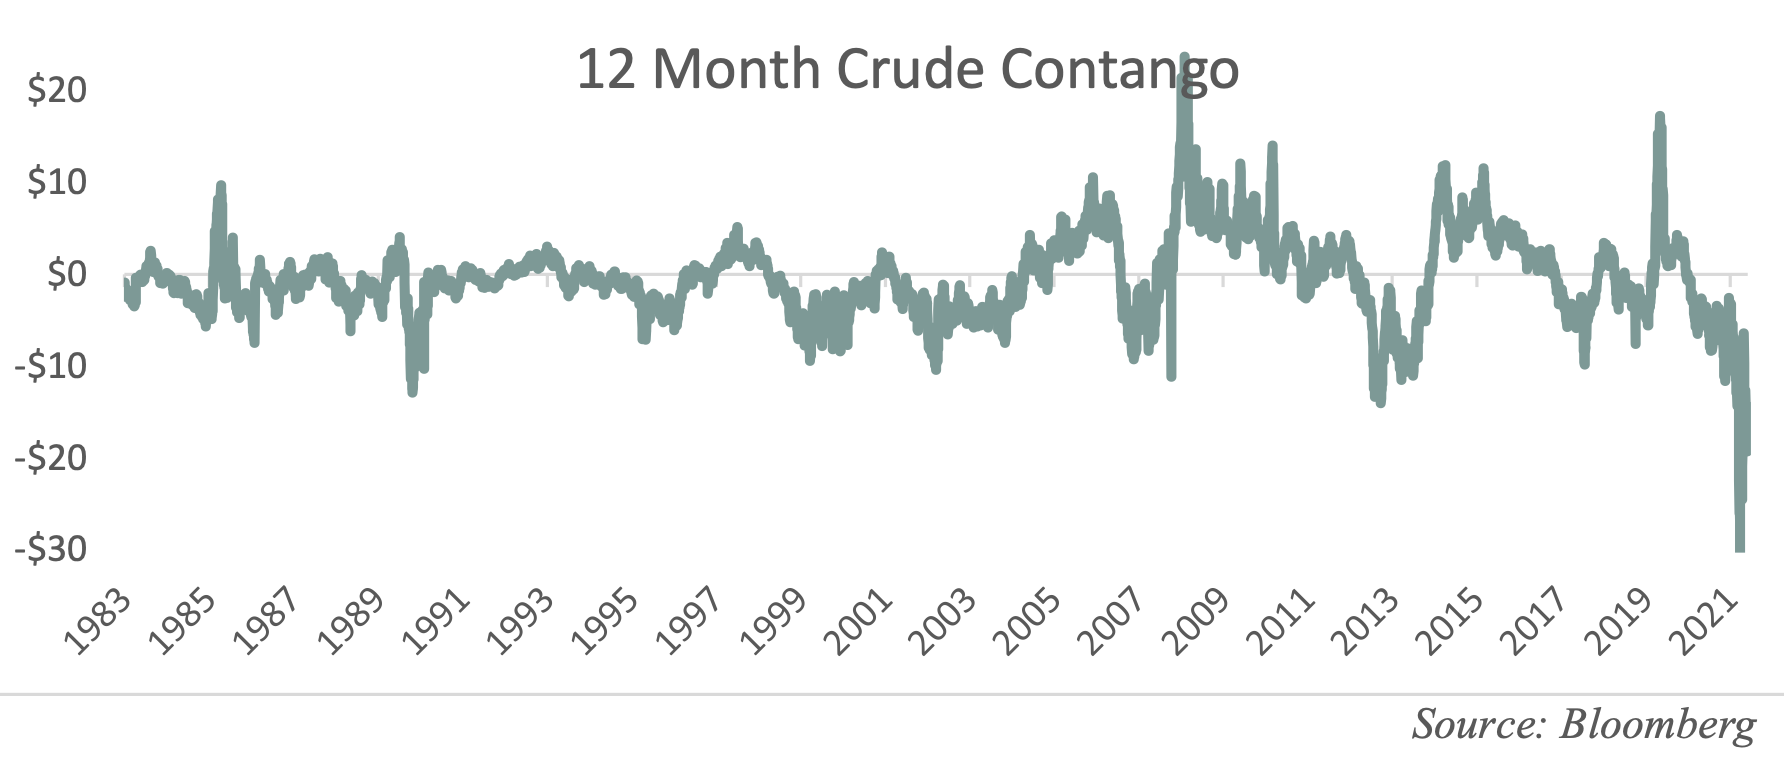 GR Blog #319 - 12 Month Crude Contango